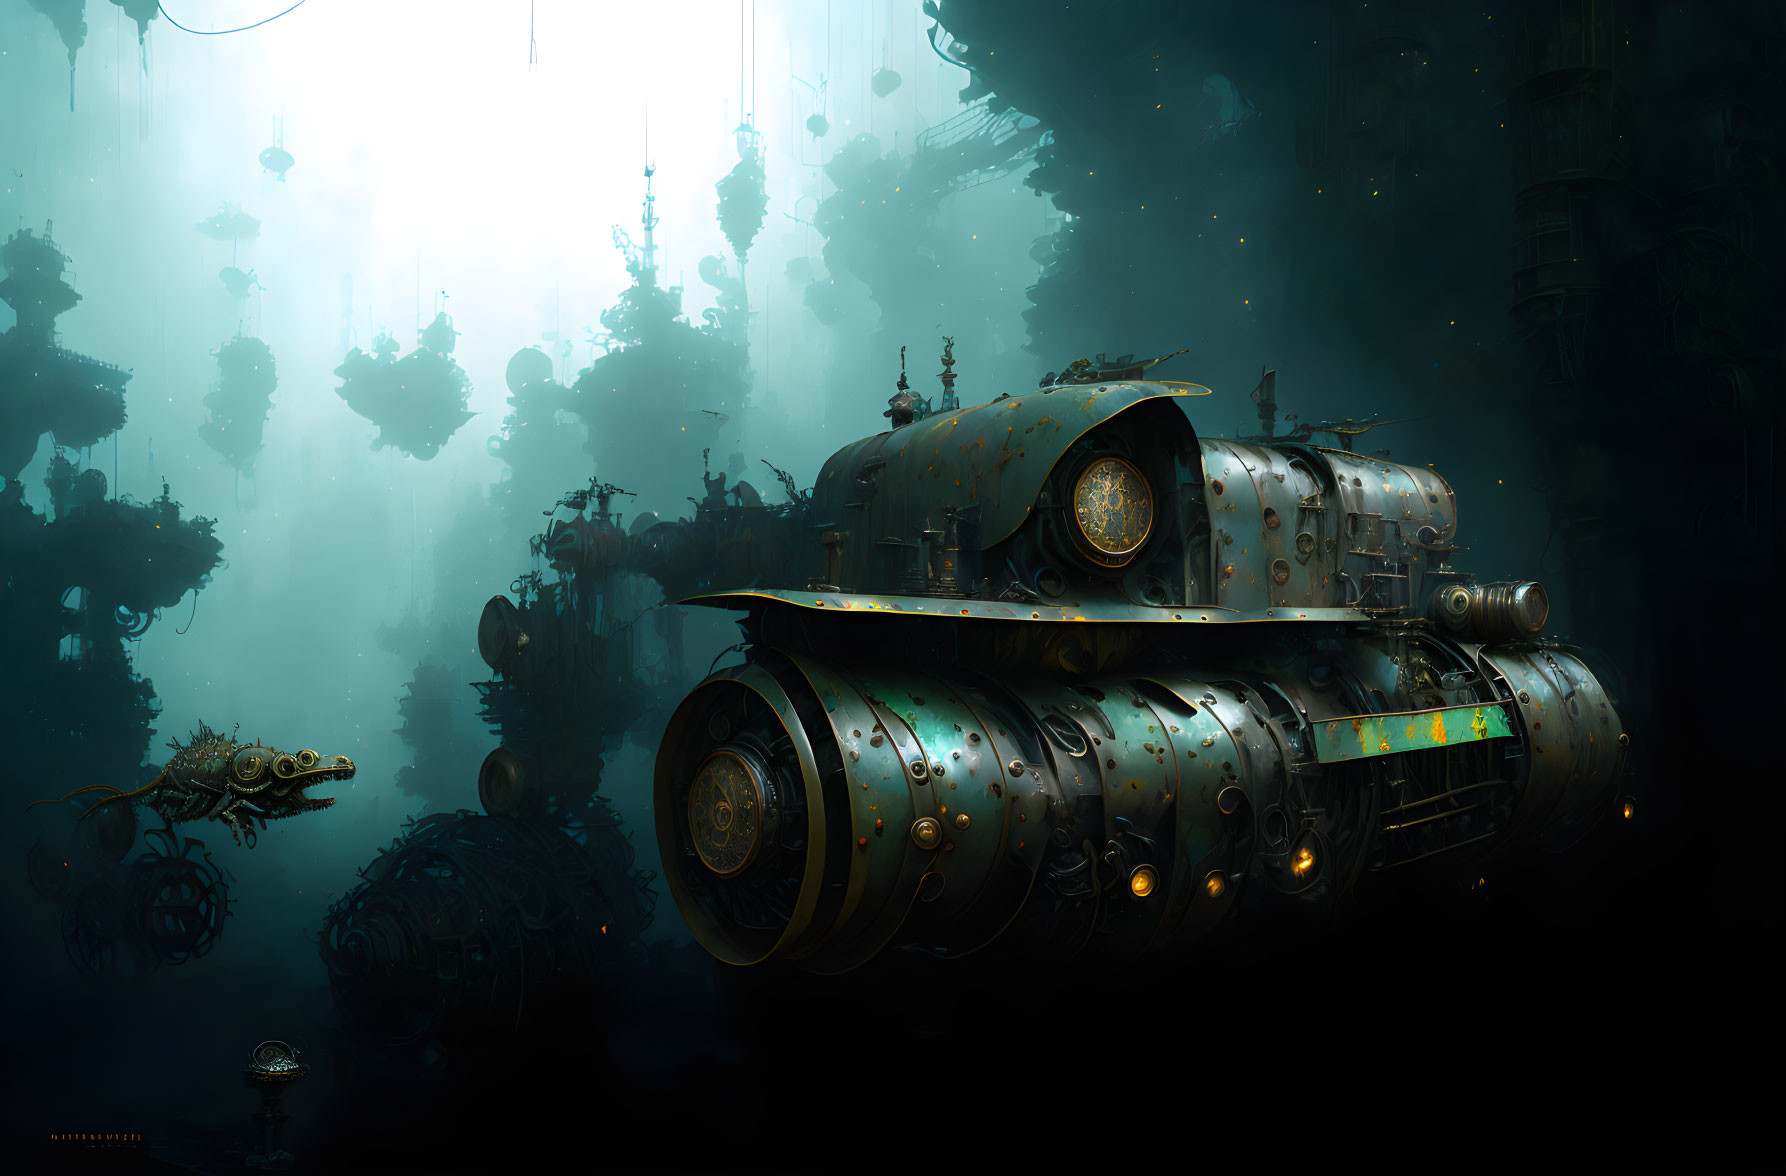 Futuristic submarine surrounded by aquatic machines in eerie underwater scene